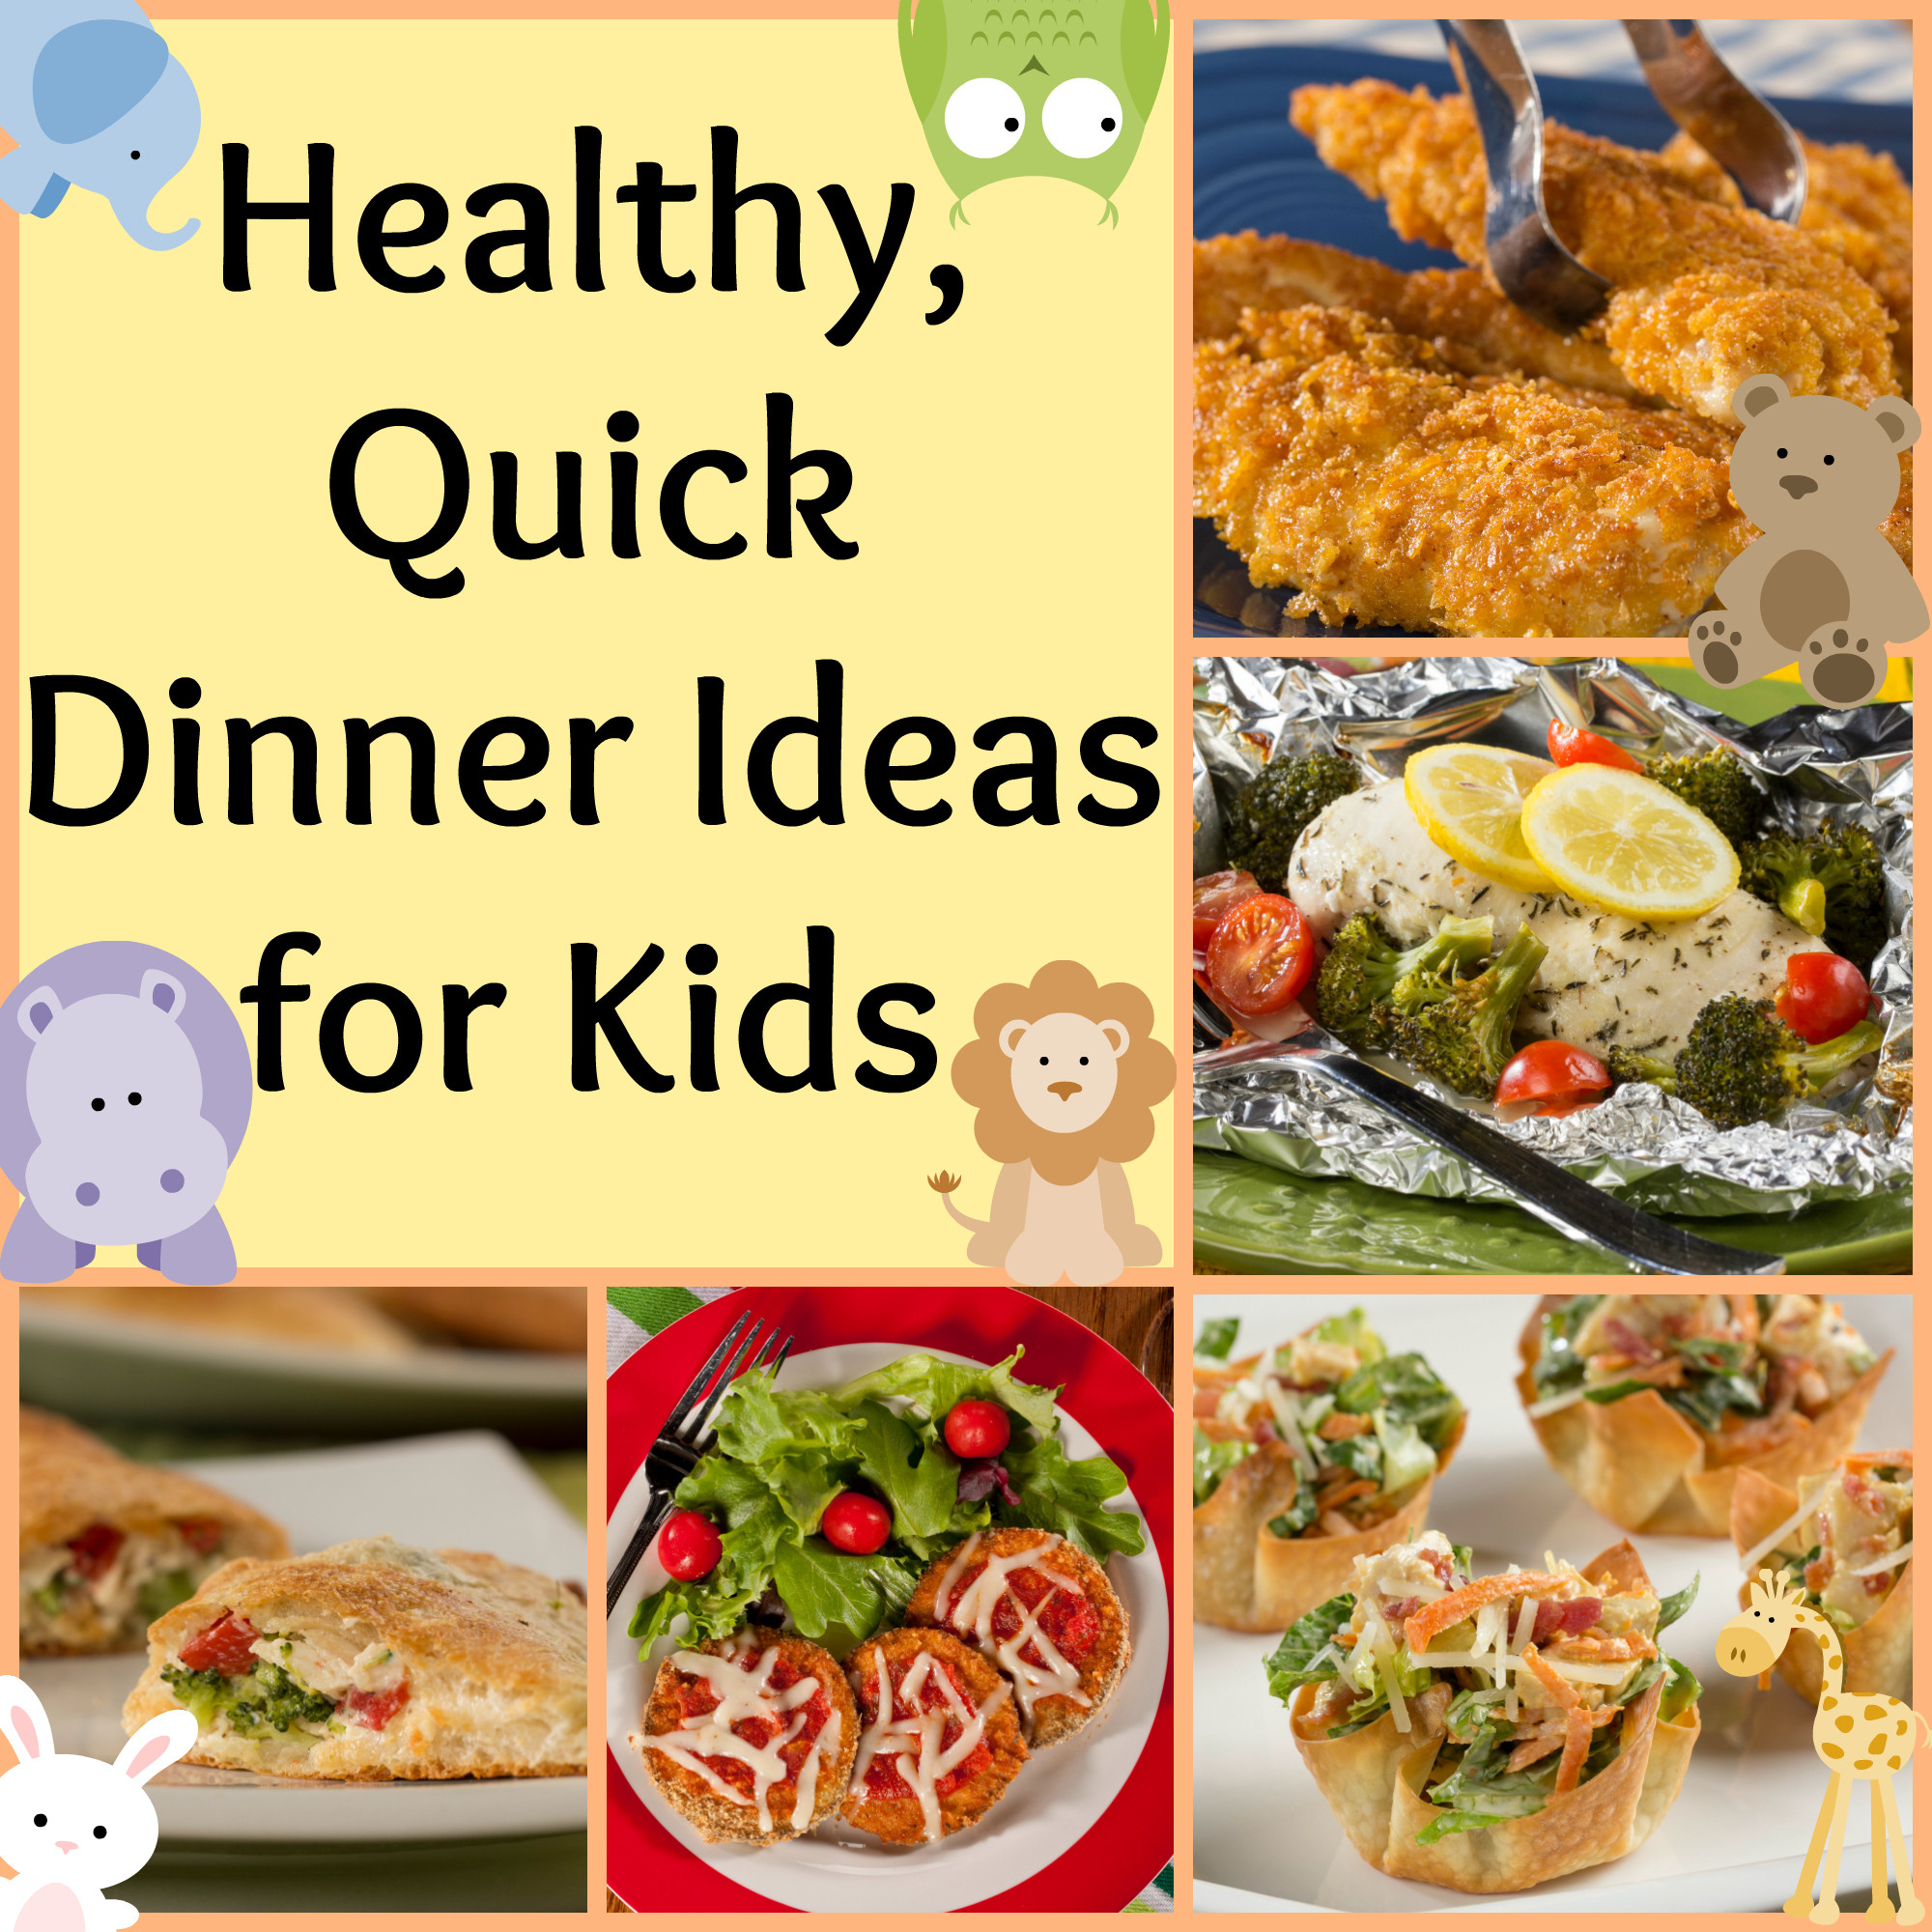 Easy Dinner Recipes For Kids
 Healthy Quick Dinner Ideas for Kids Mr Food s Blog